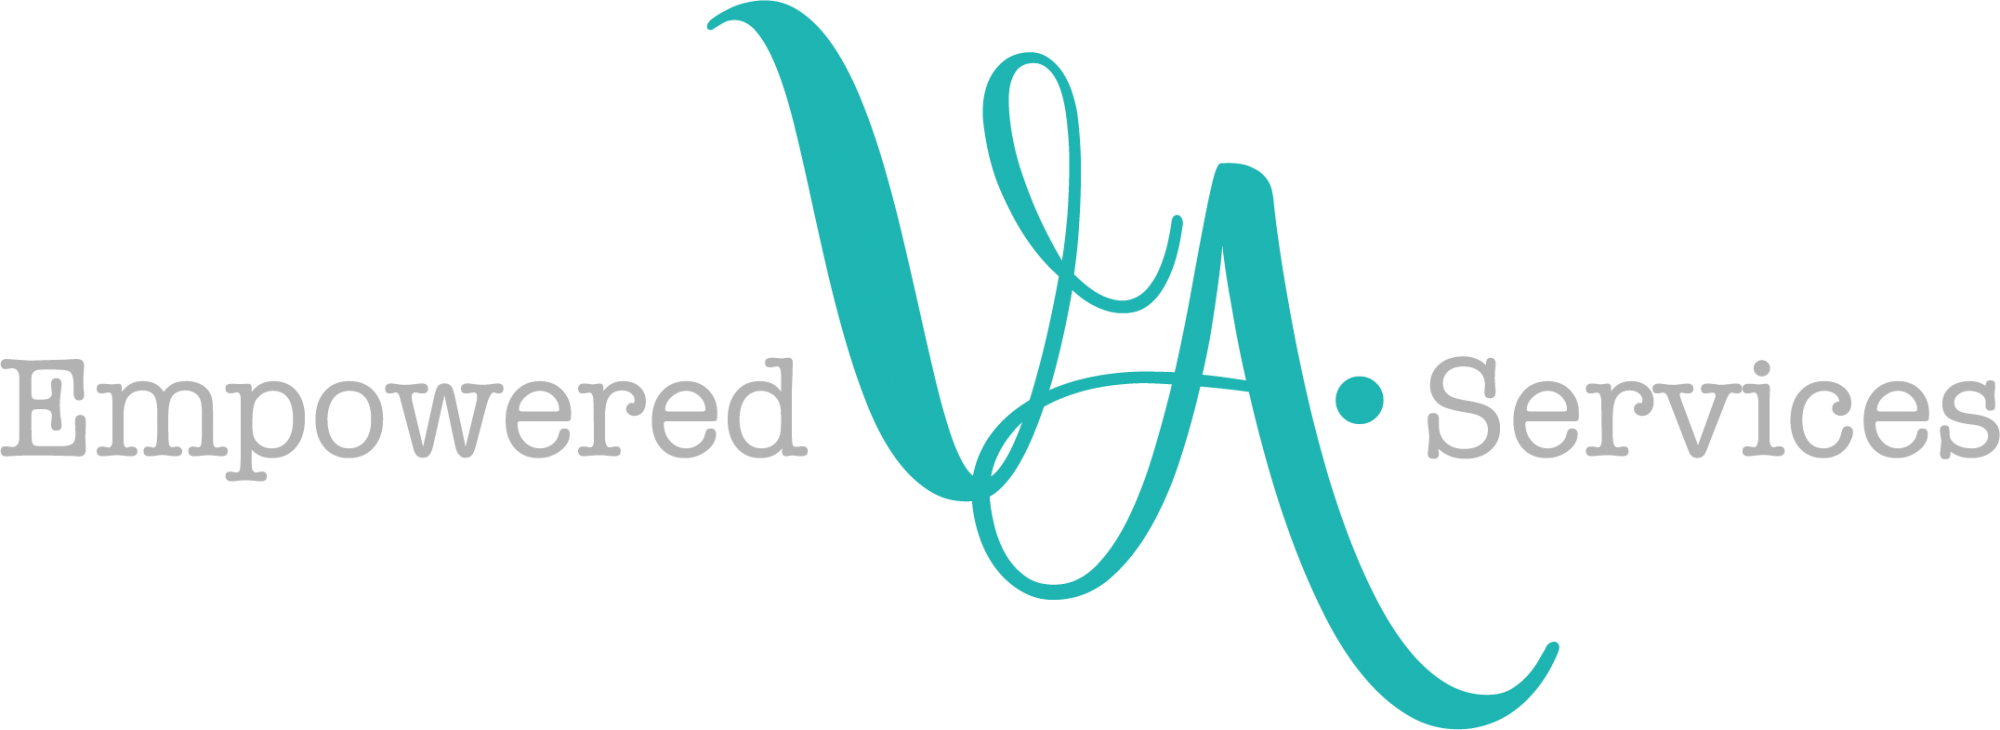 Empowered VA Services Larger Logo